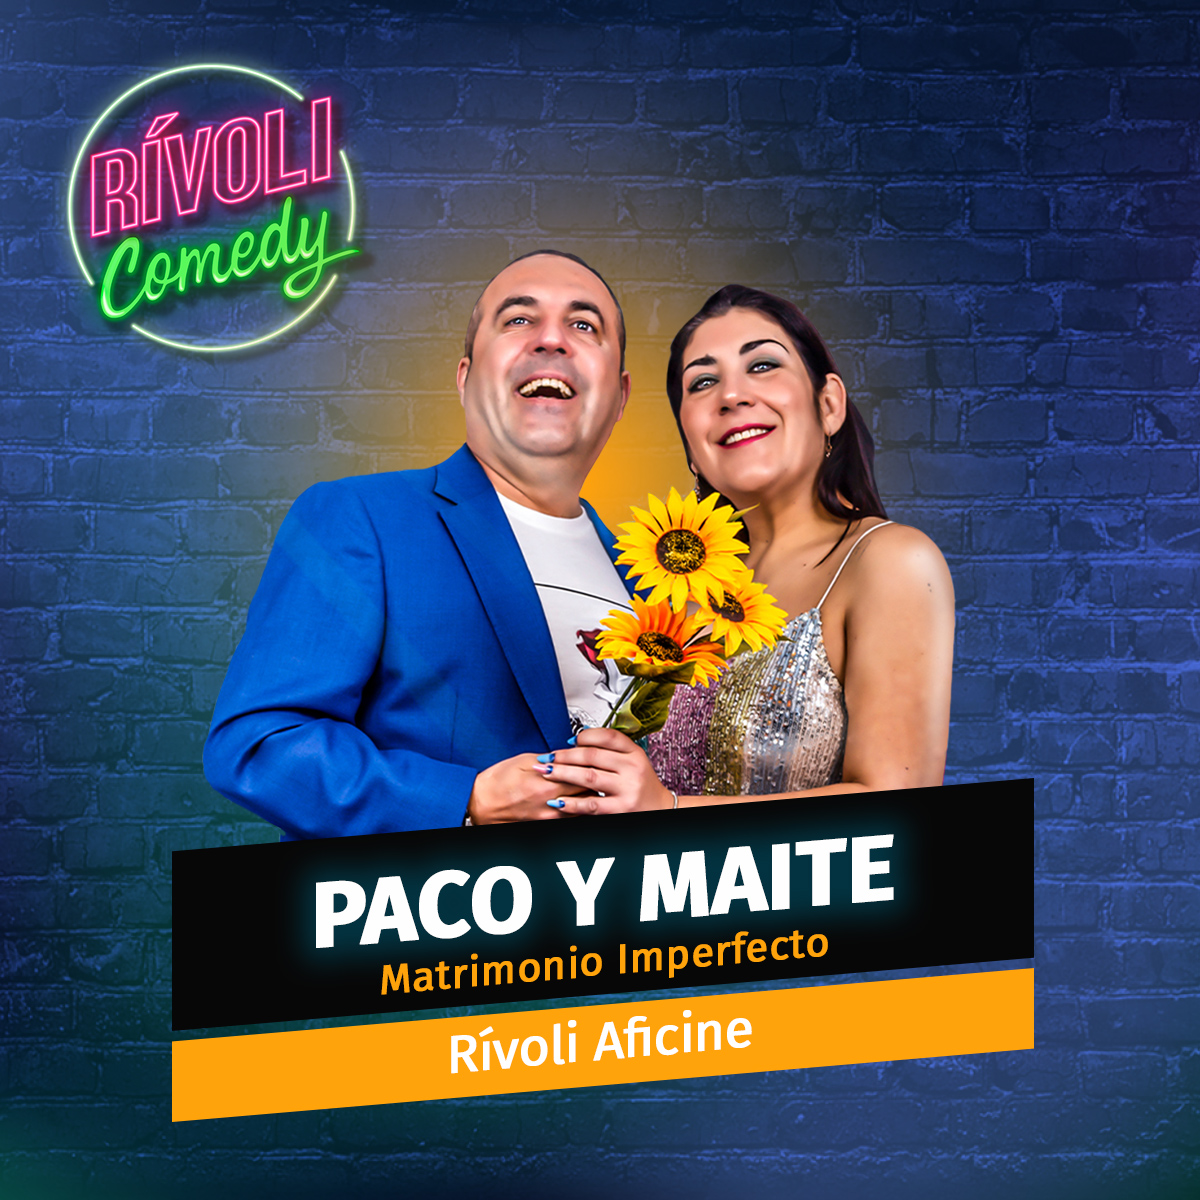 Paco y Maite | Matrimonio Imperfecto · 24 de mayo · Palma de Mallorca (Rívoli Comedy)